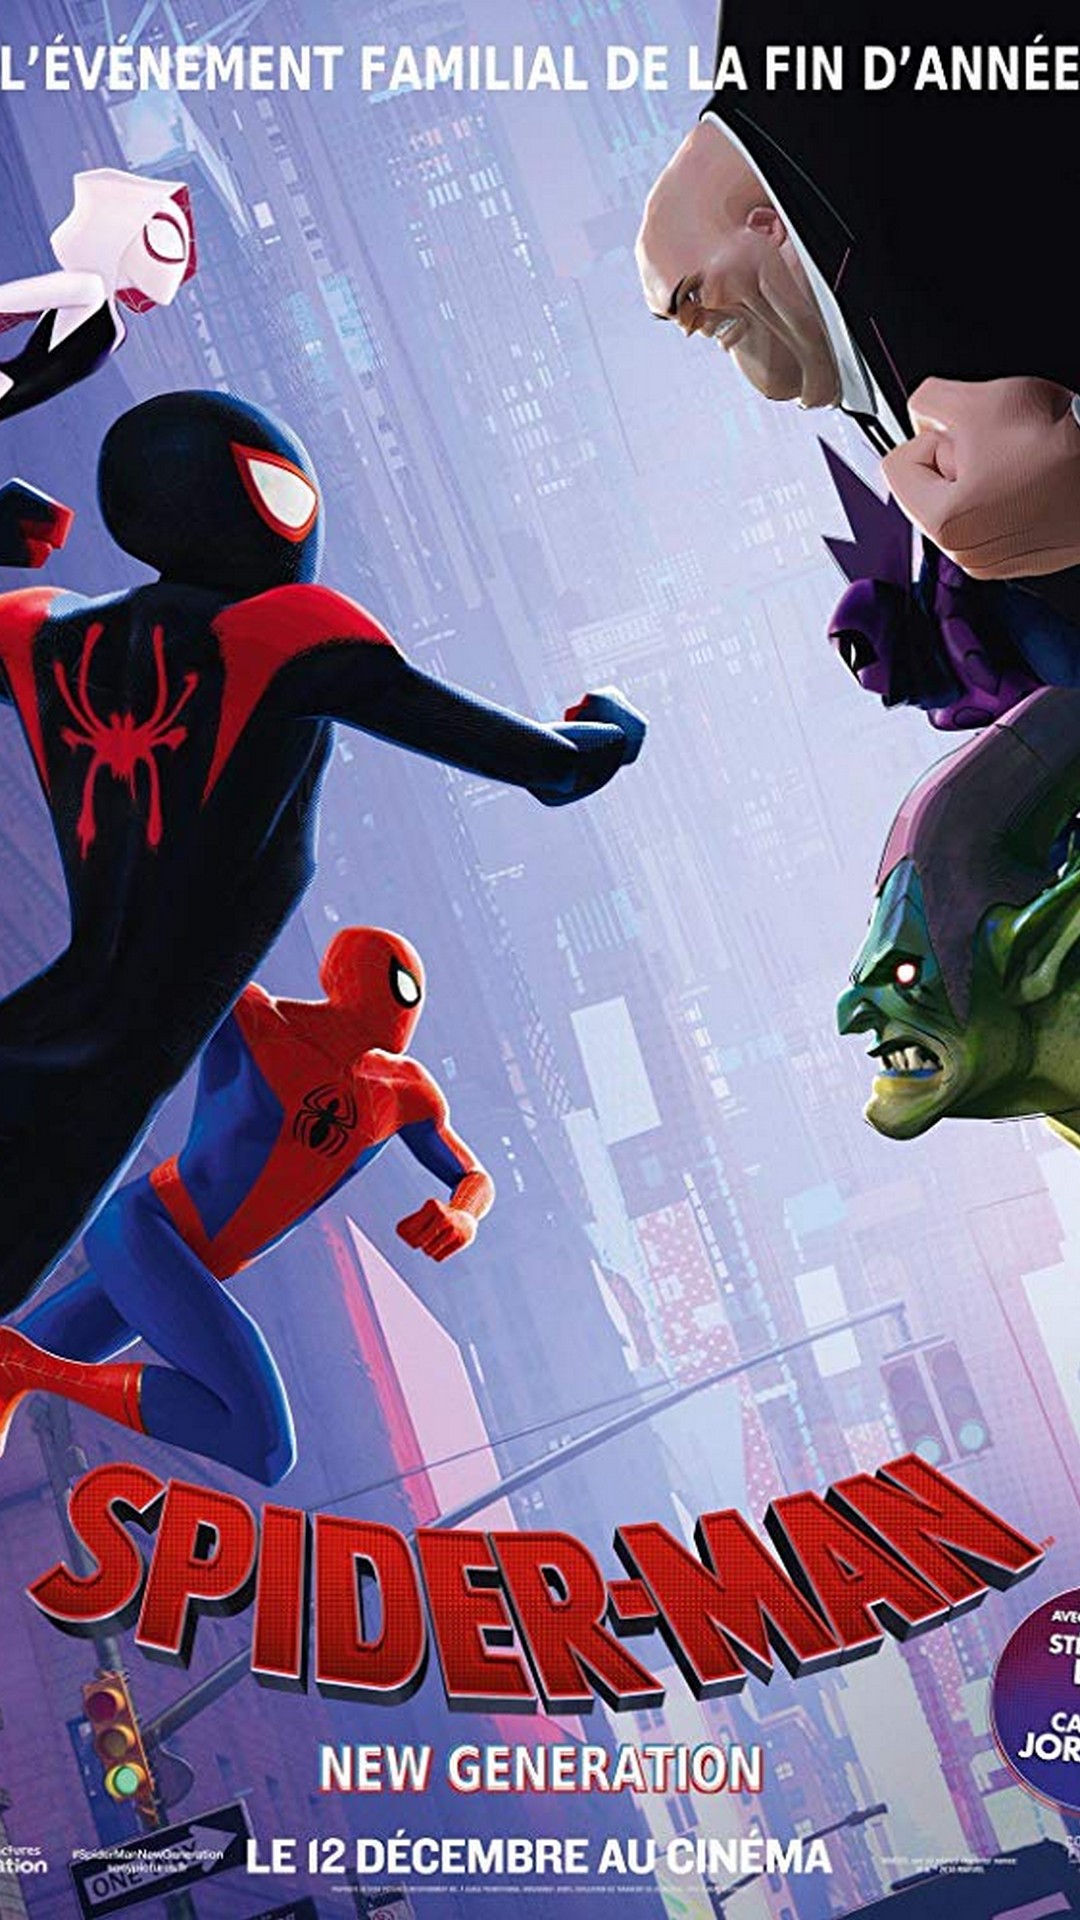 spiderman wallpaper,fictional character,movie,poster,hero,superhero